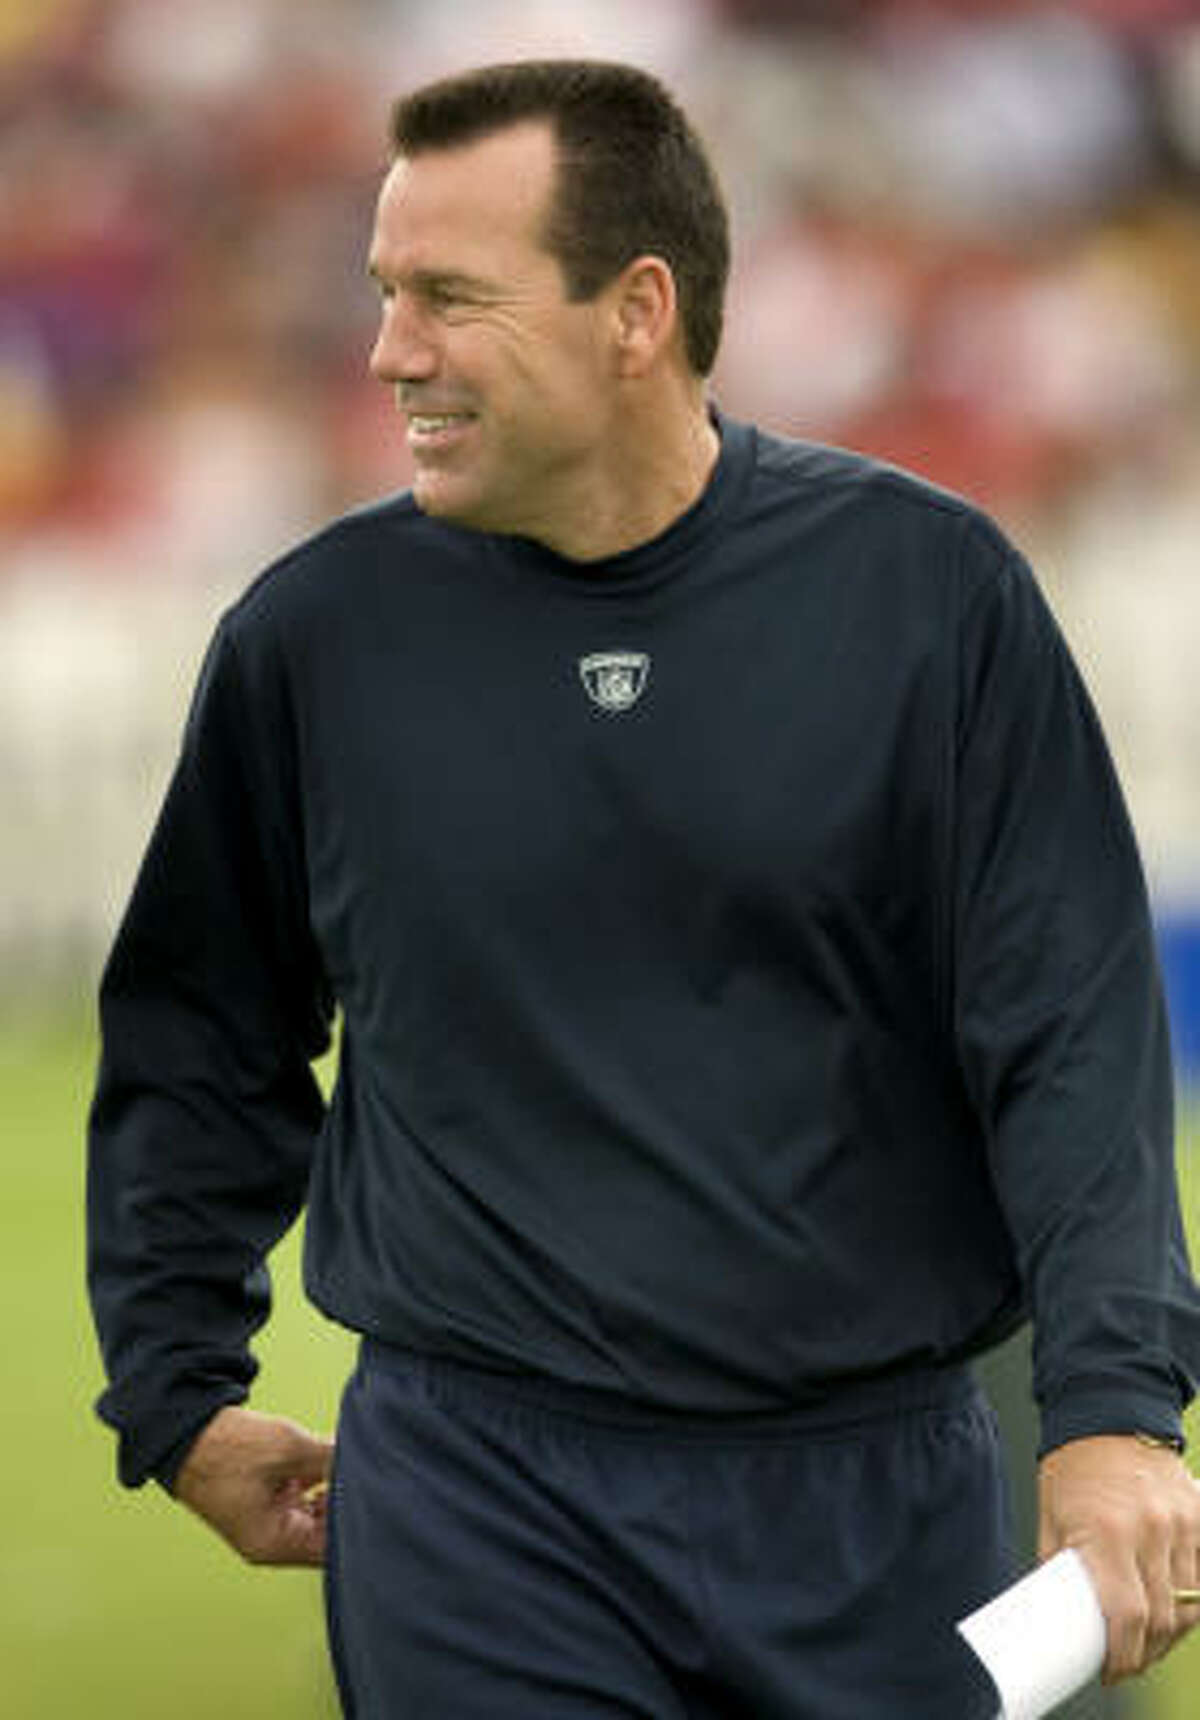 Texans coach Gary Kubiak smiles as he walks between drills.